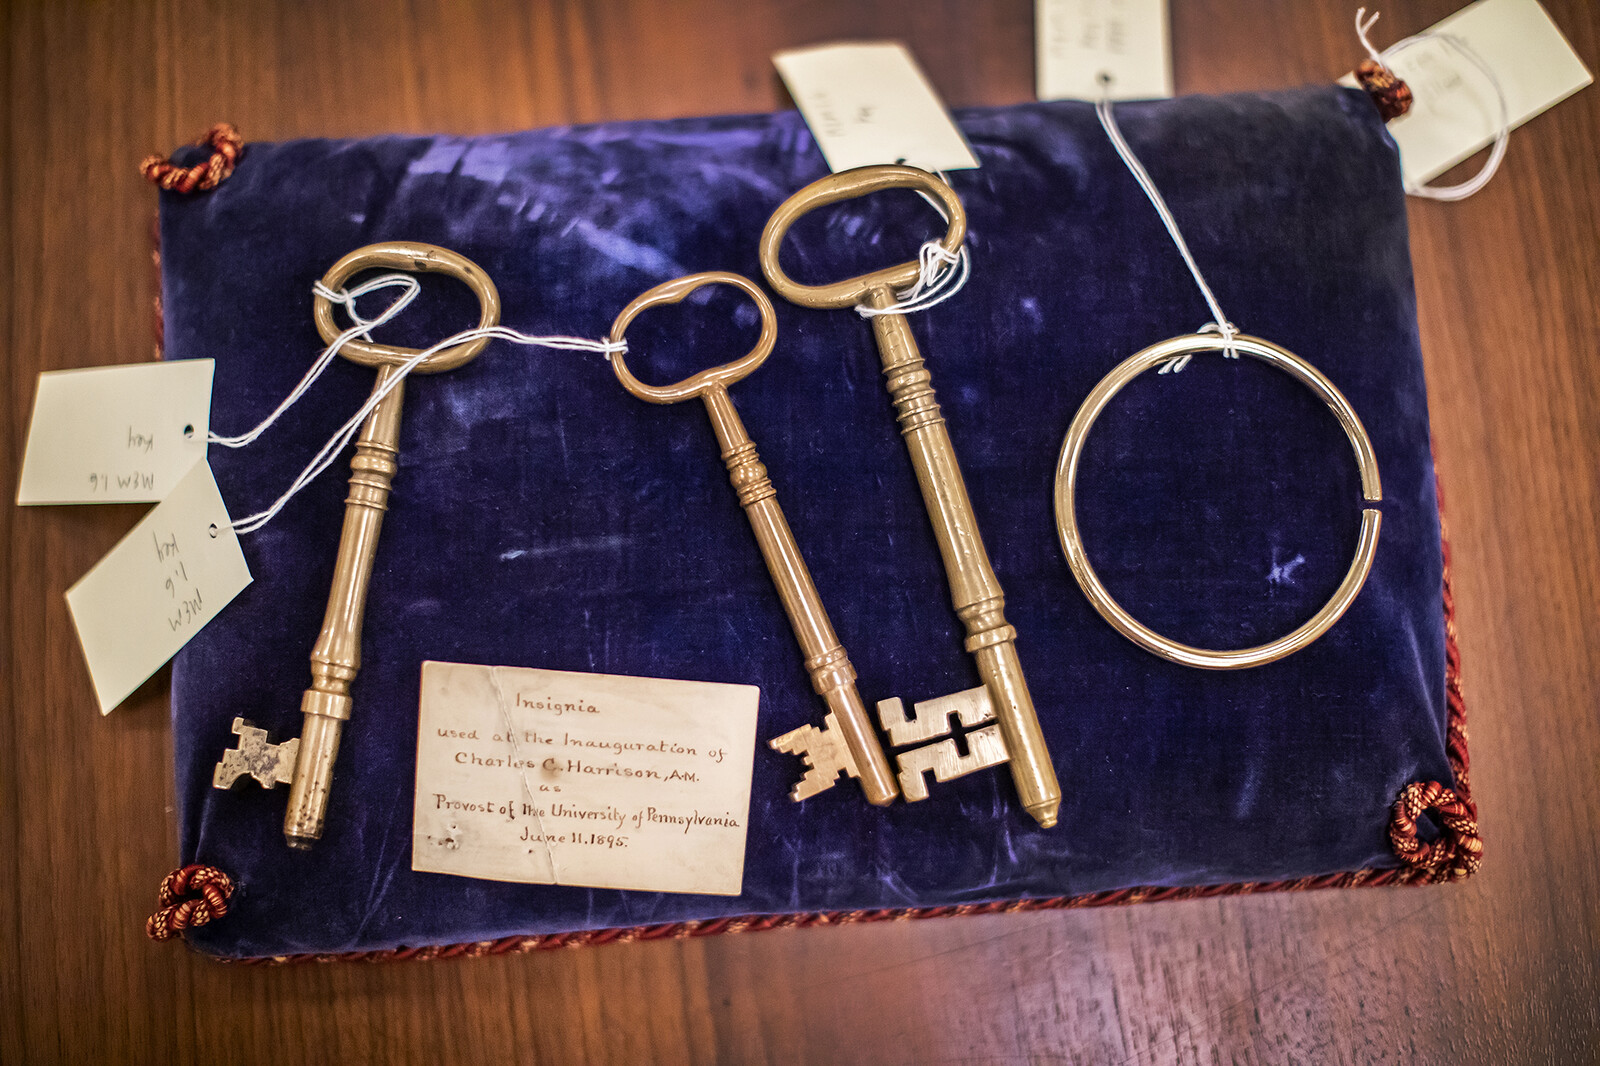 historical keys for inauguration